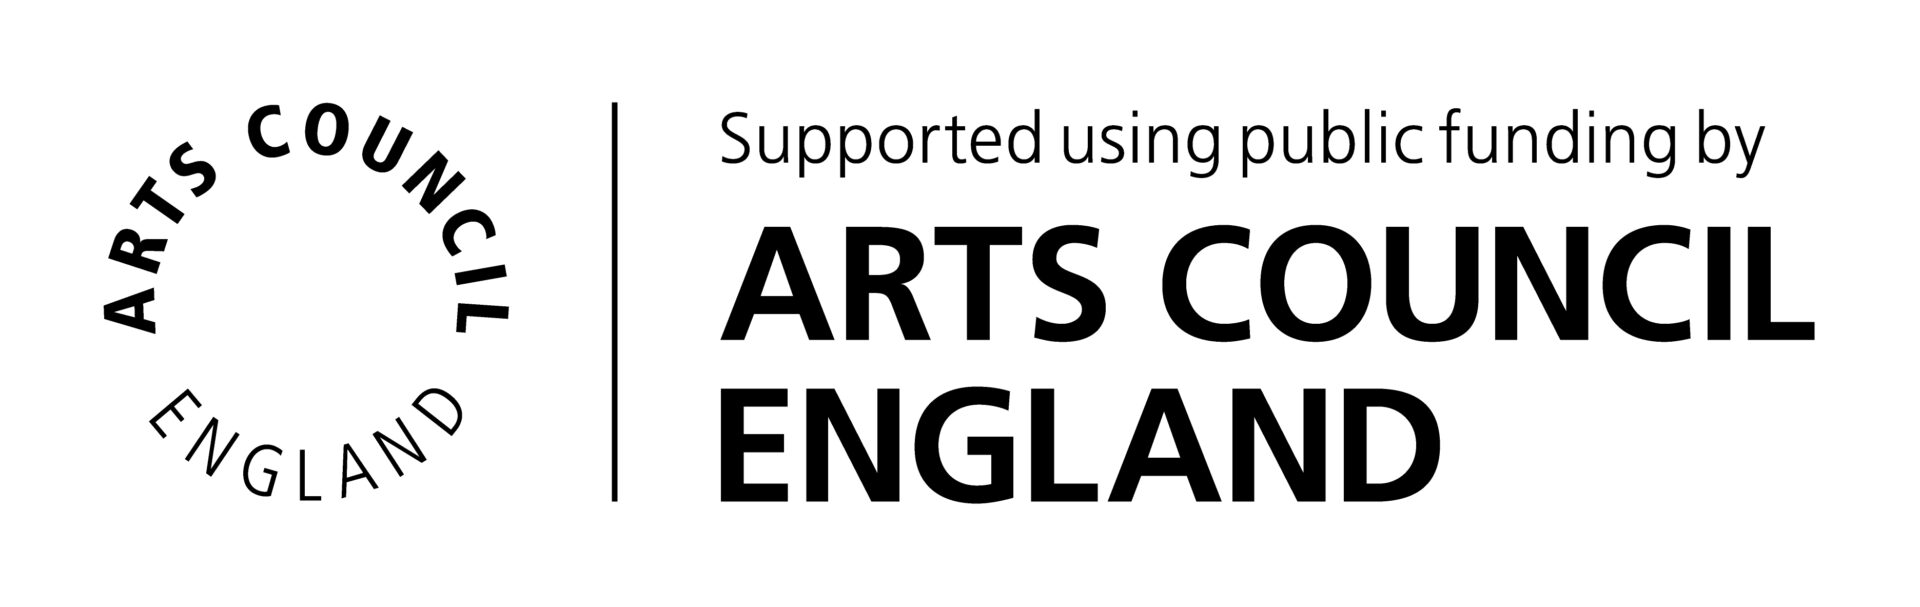 Arts Countil England logo